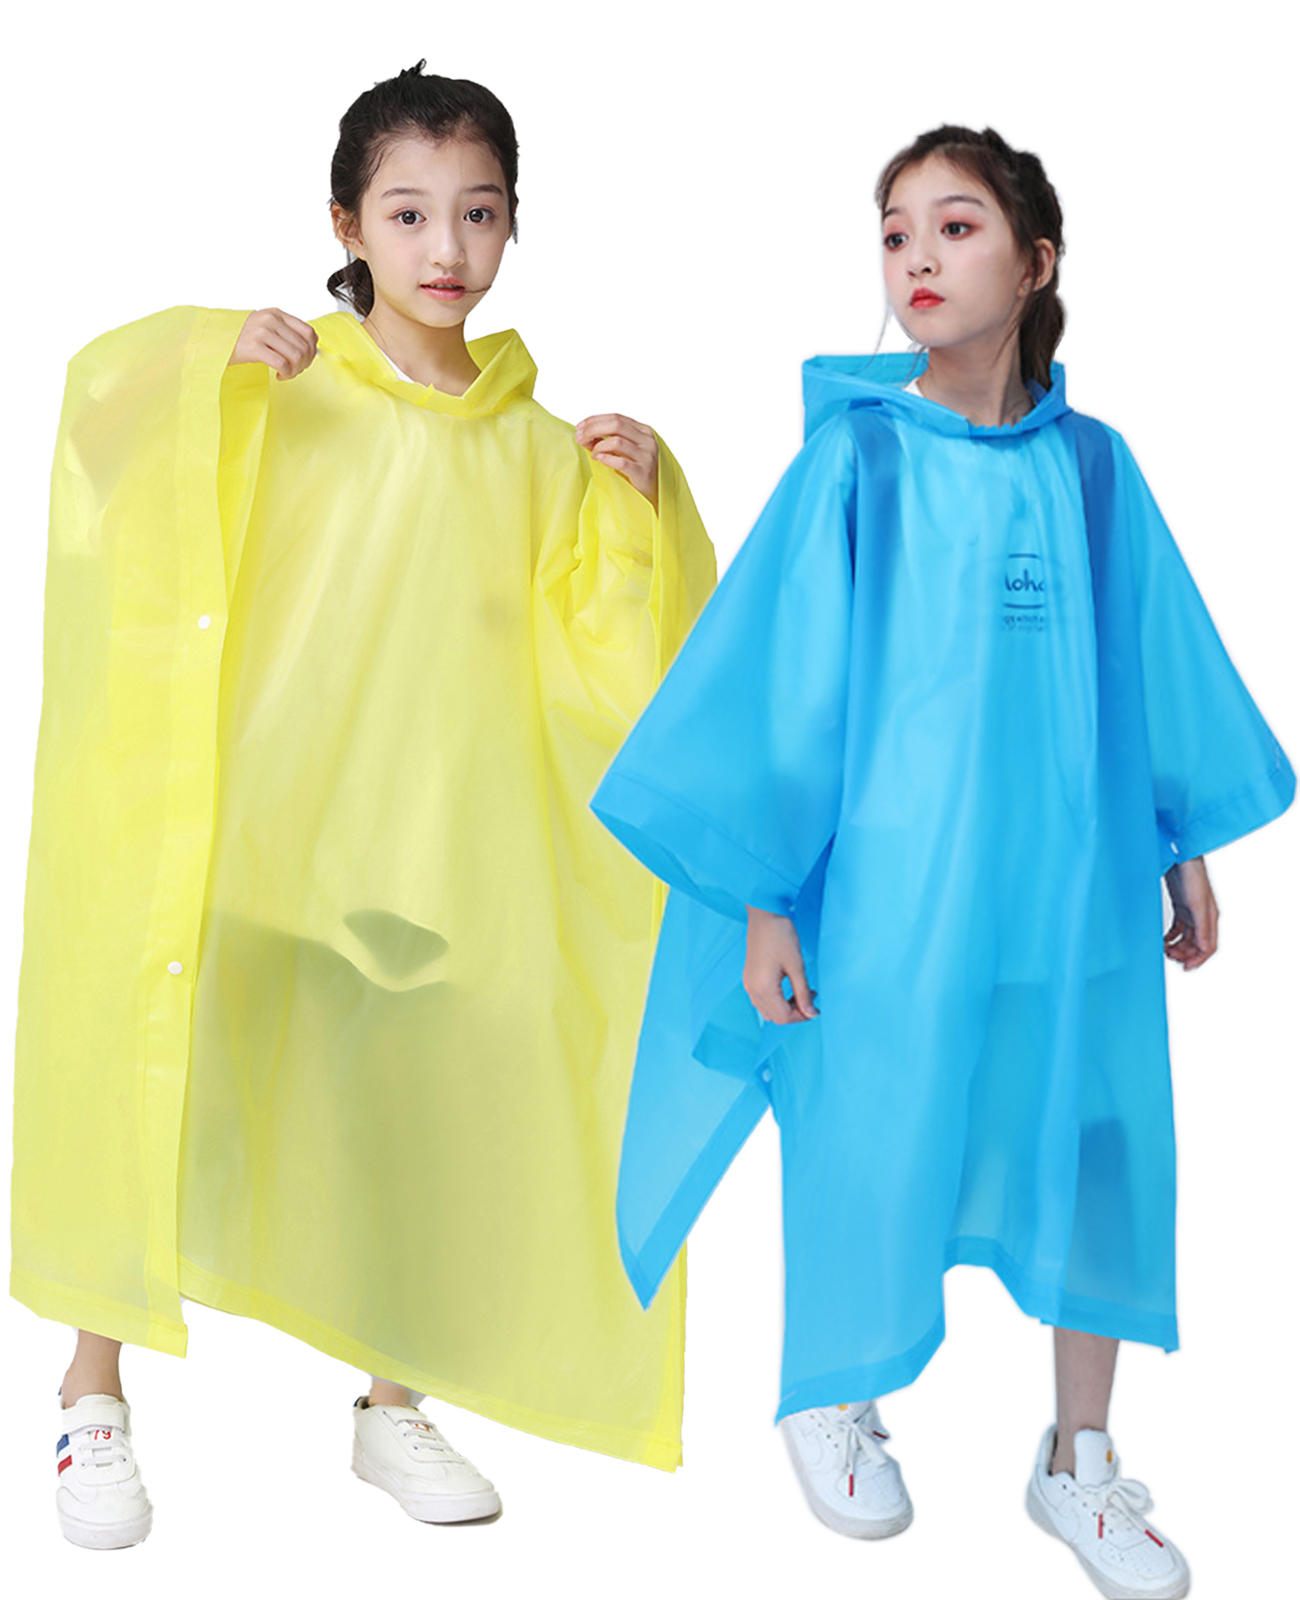 Makonus Raincoat for Kids, Pack of 2 EVA Kids Rain Coats Reusable